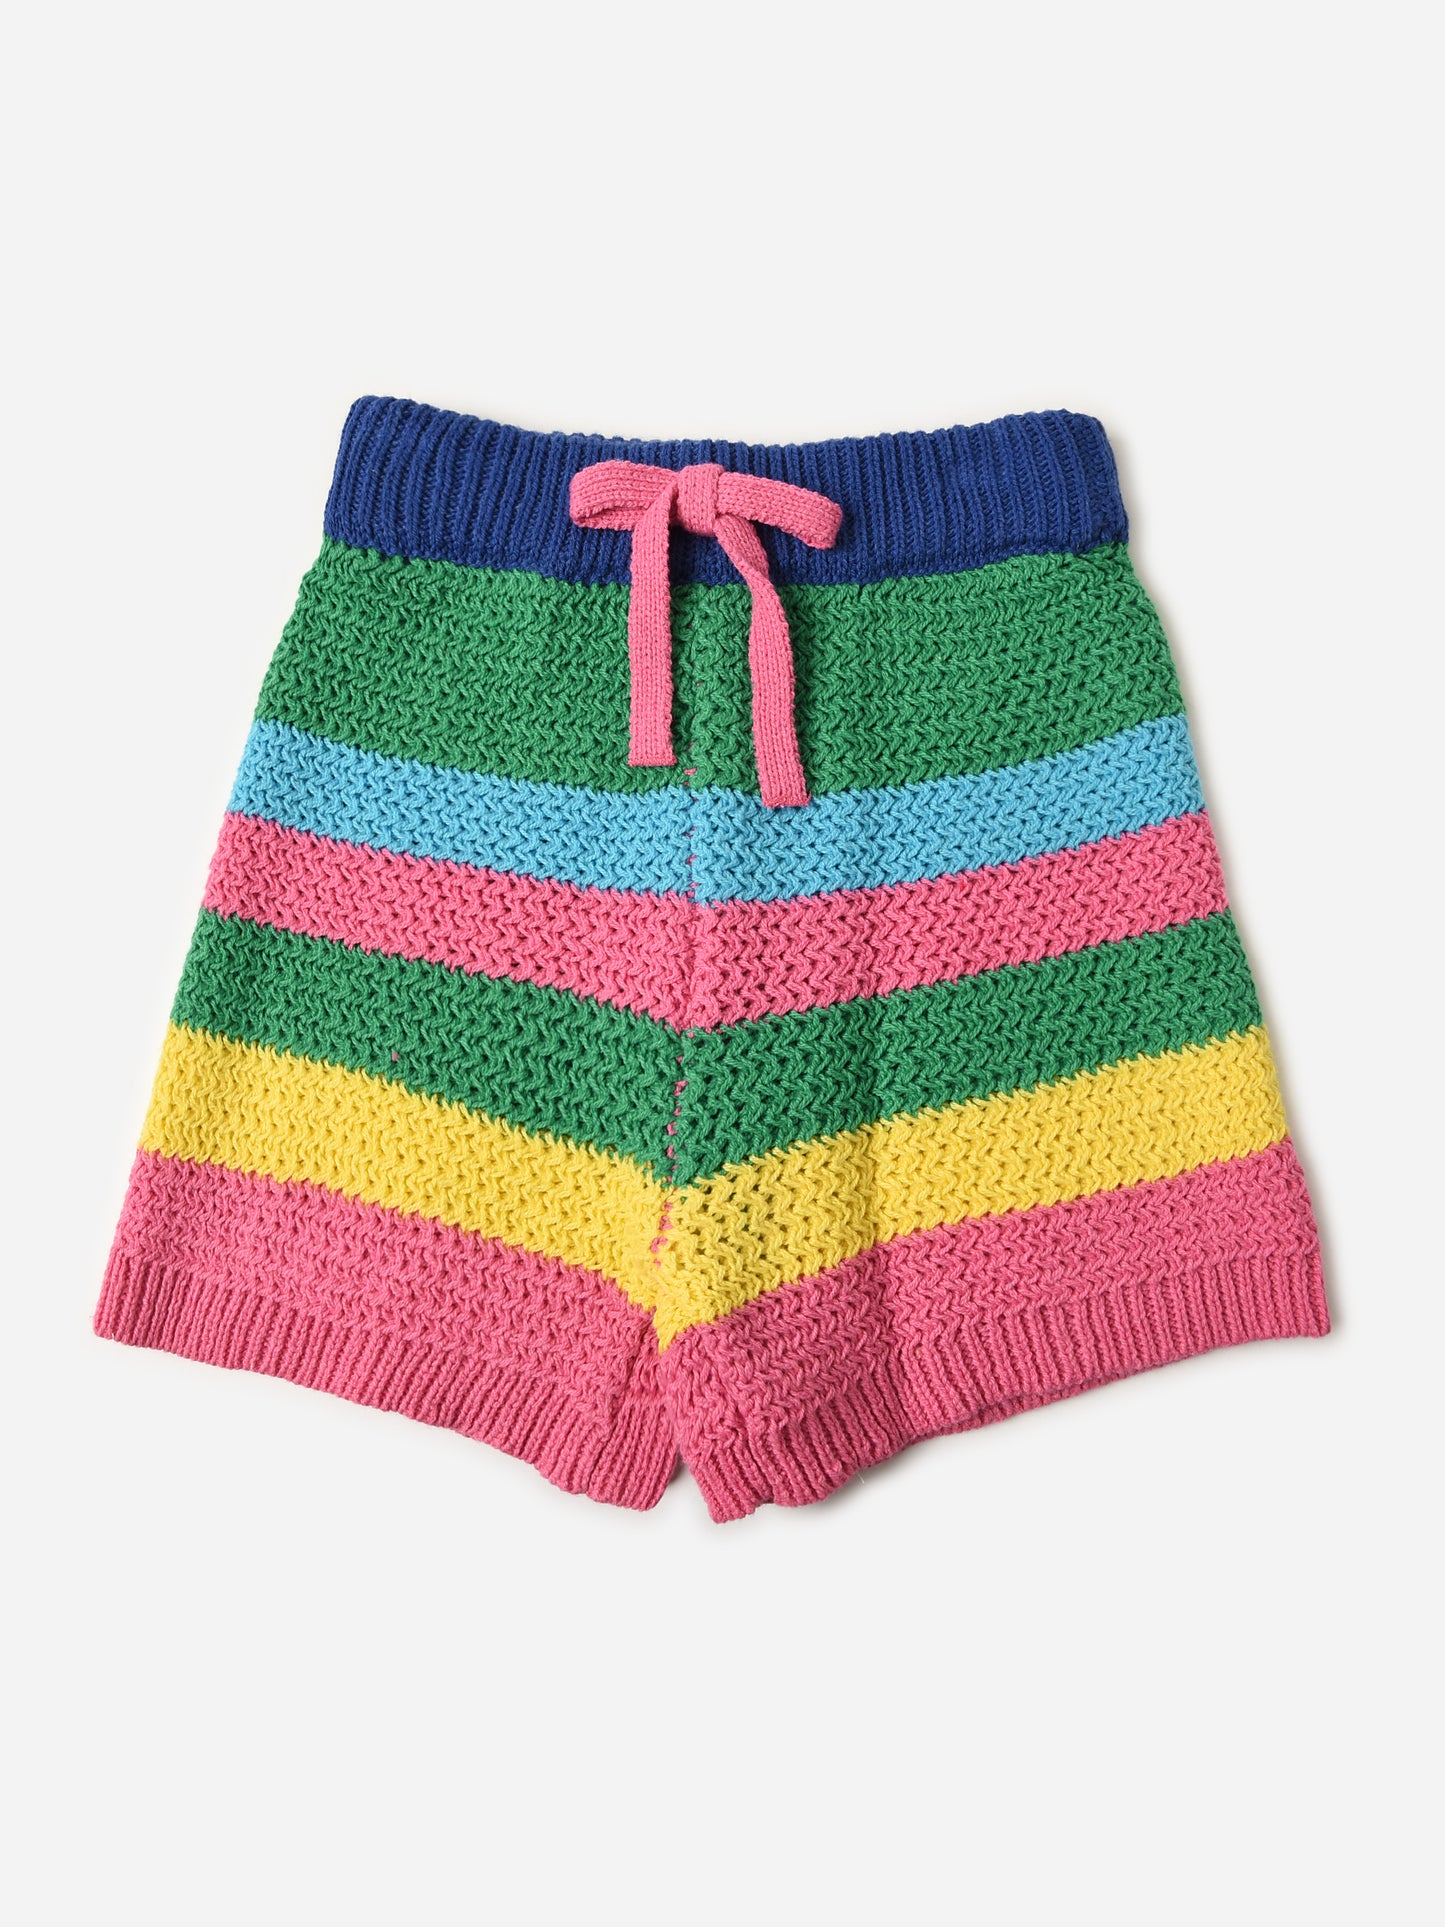 Hannah Banana Girls' Striped Crochet Short